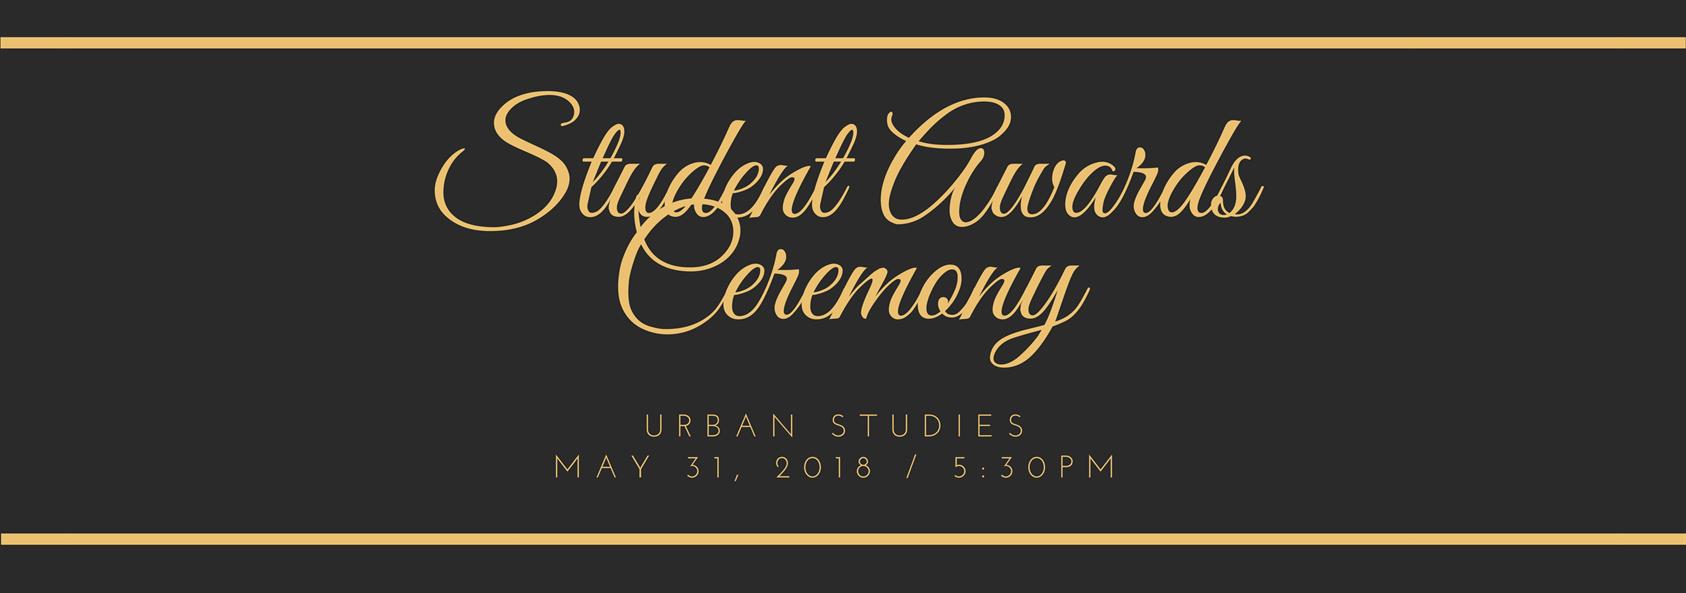 Student Awards Ceremony